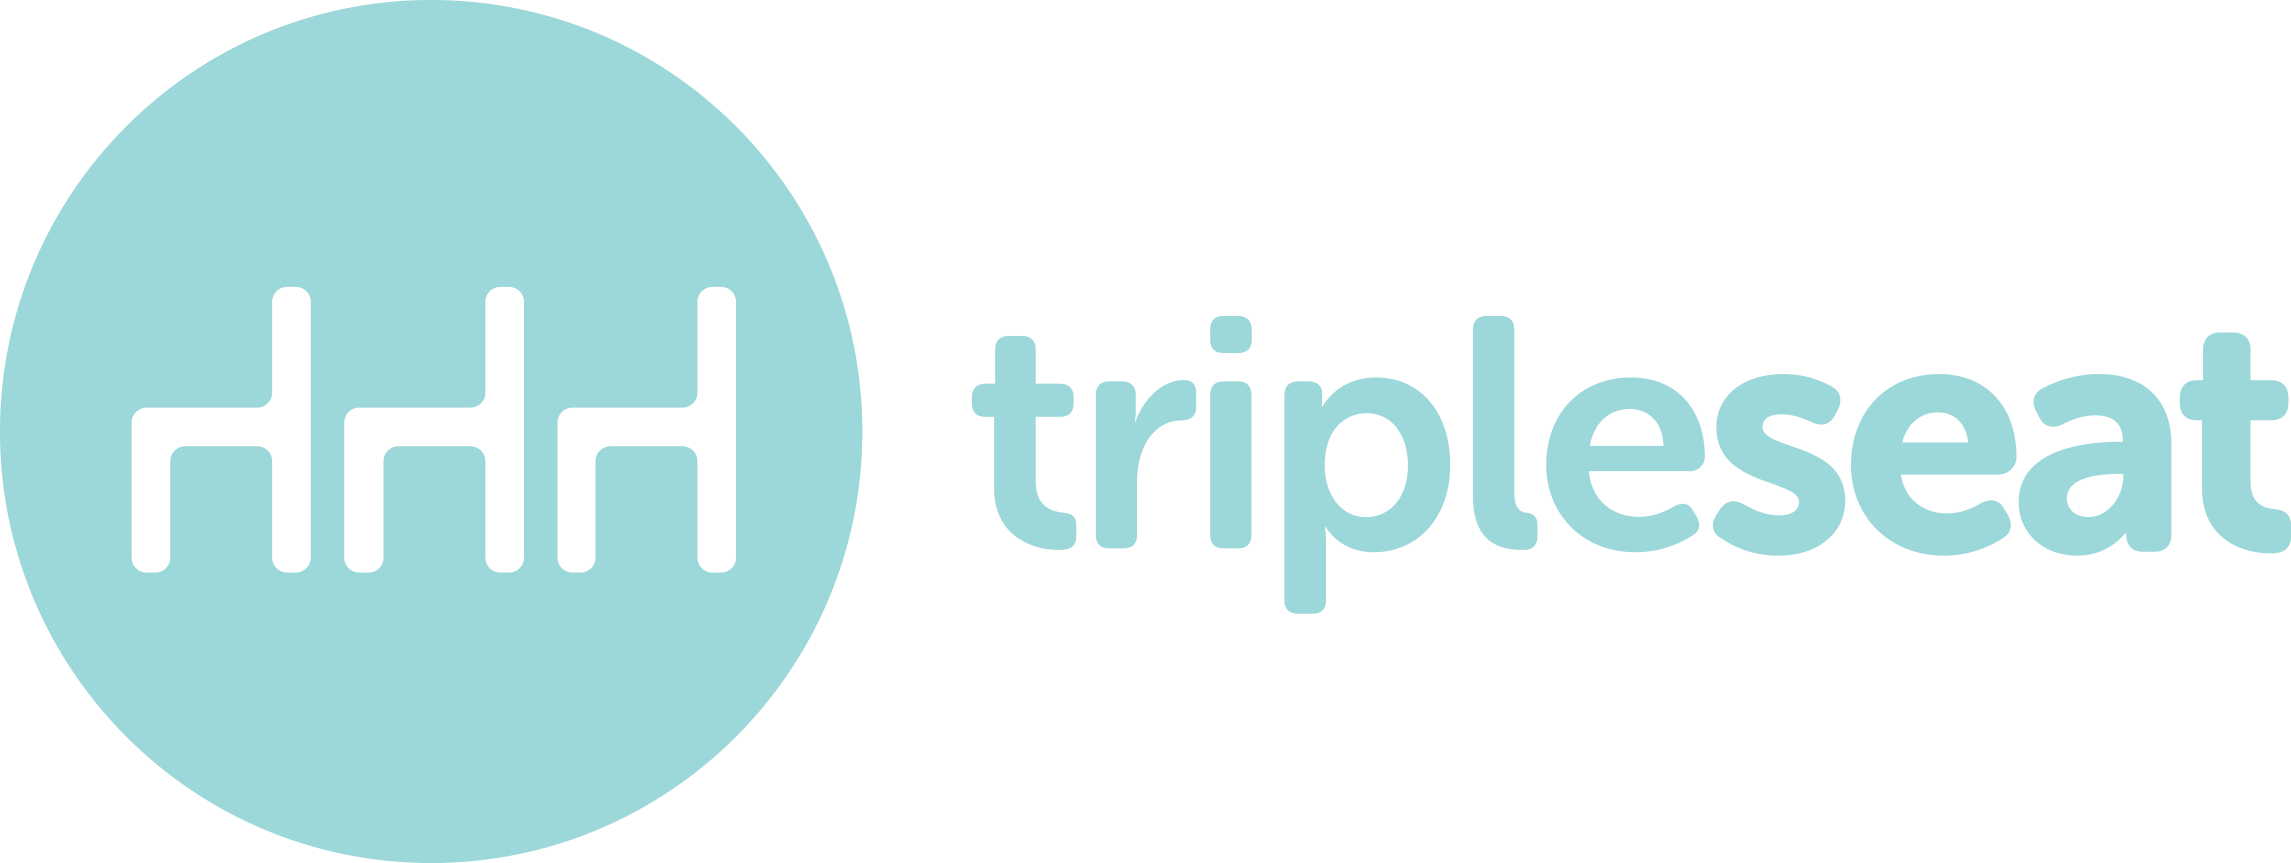 Tripleseat Software Company Logo